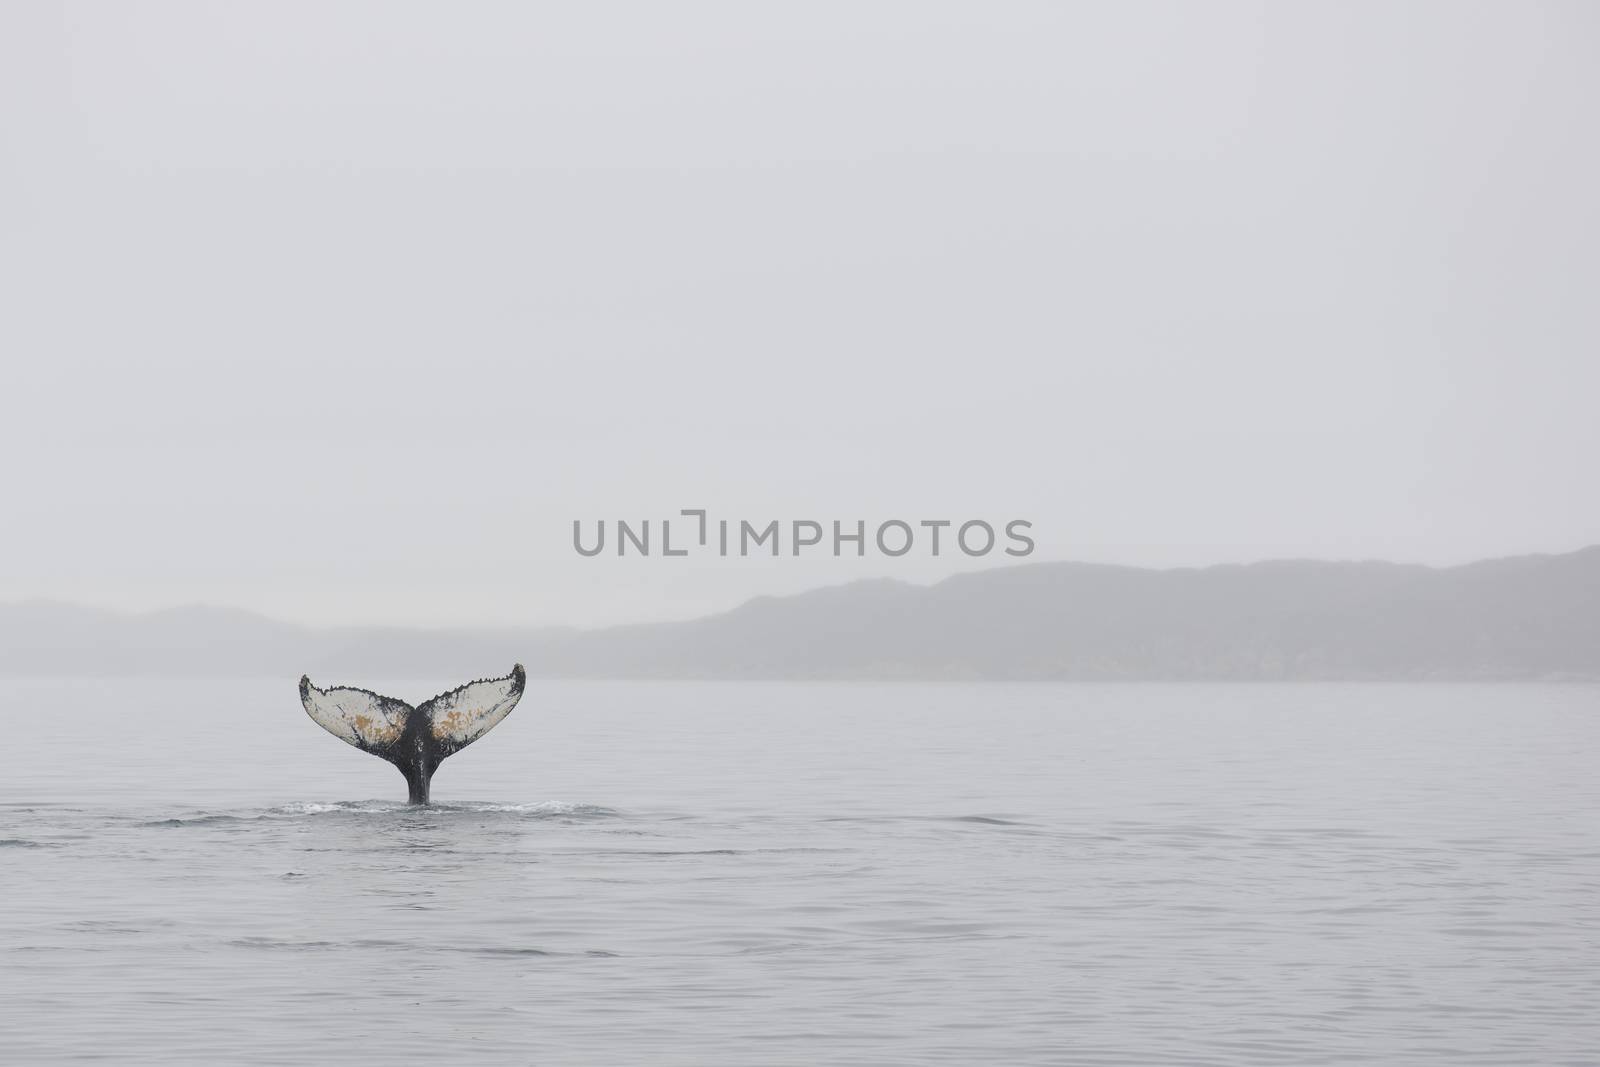 Humpback whales by Arrxxx